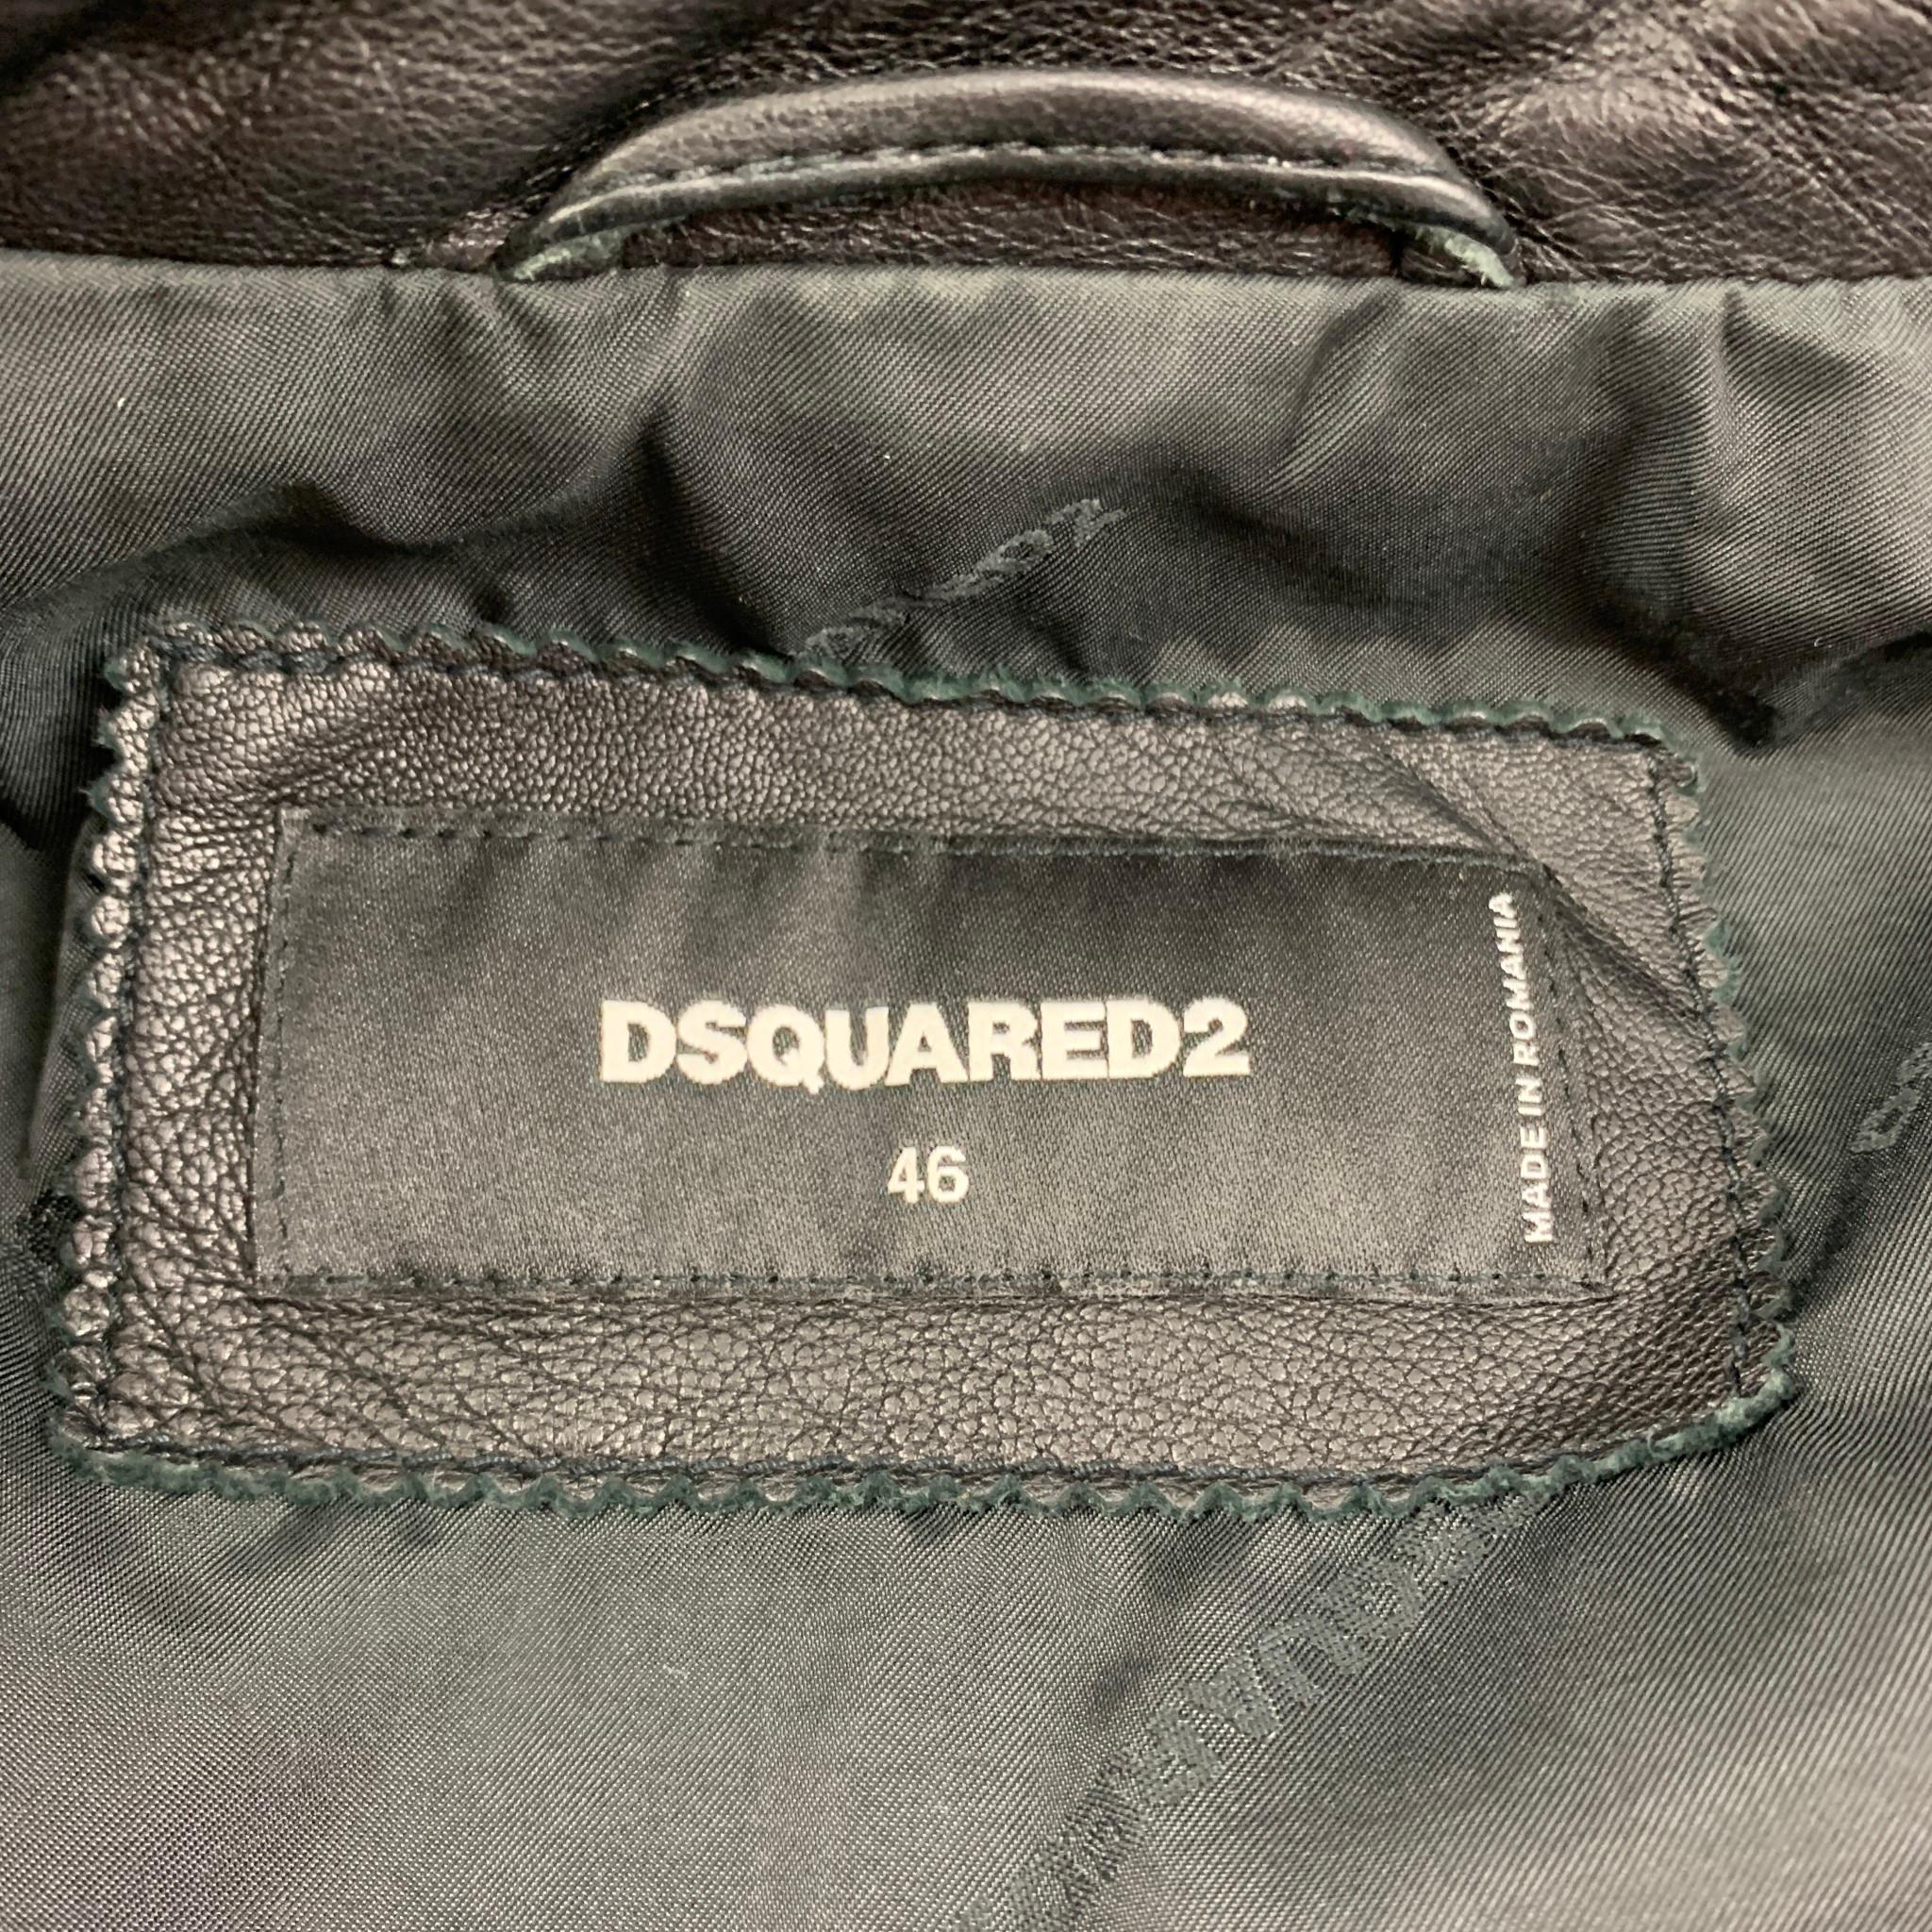 DSQUARED2 Size 36 Black Leather Zip Up Jacket 3